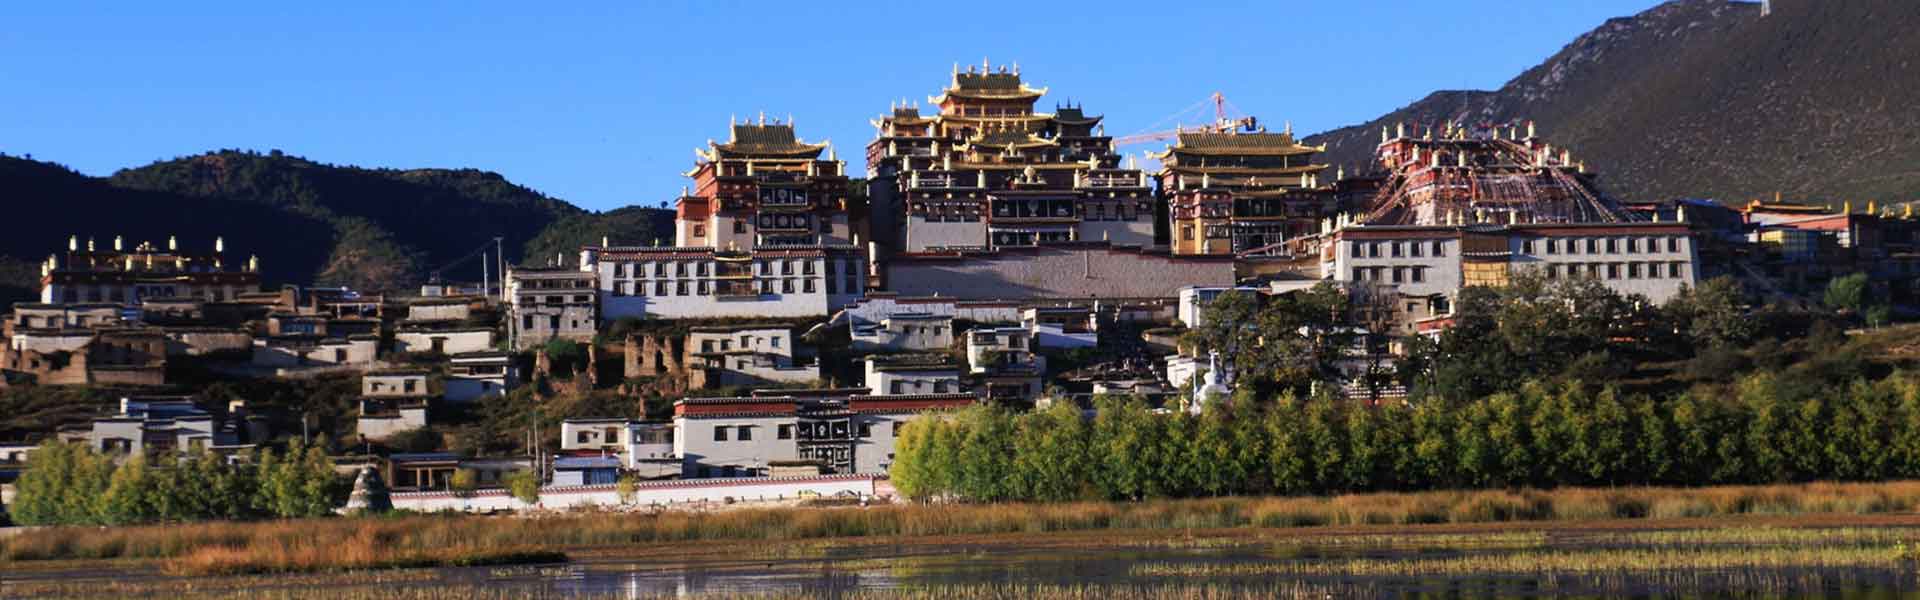 Shangri-la, Yunnan Tours